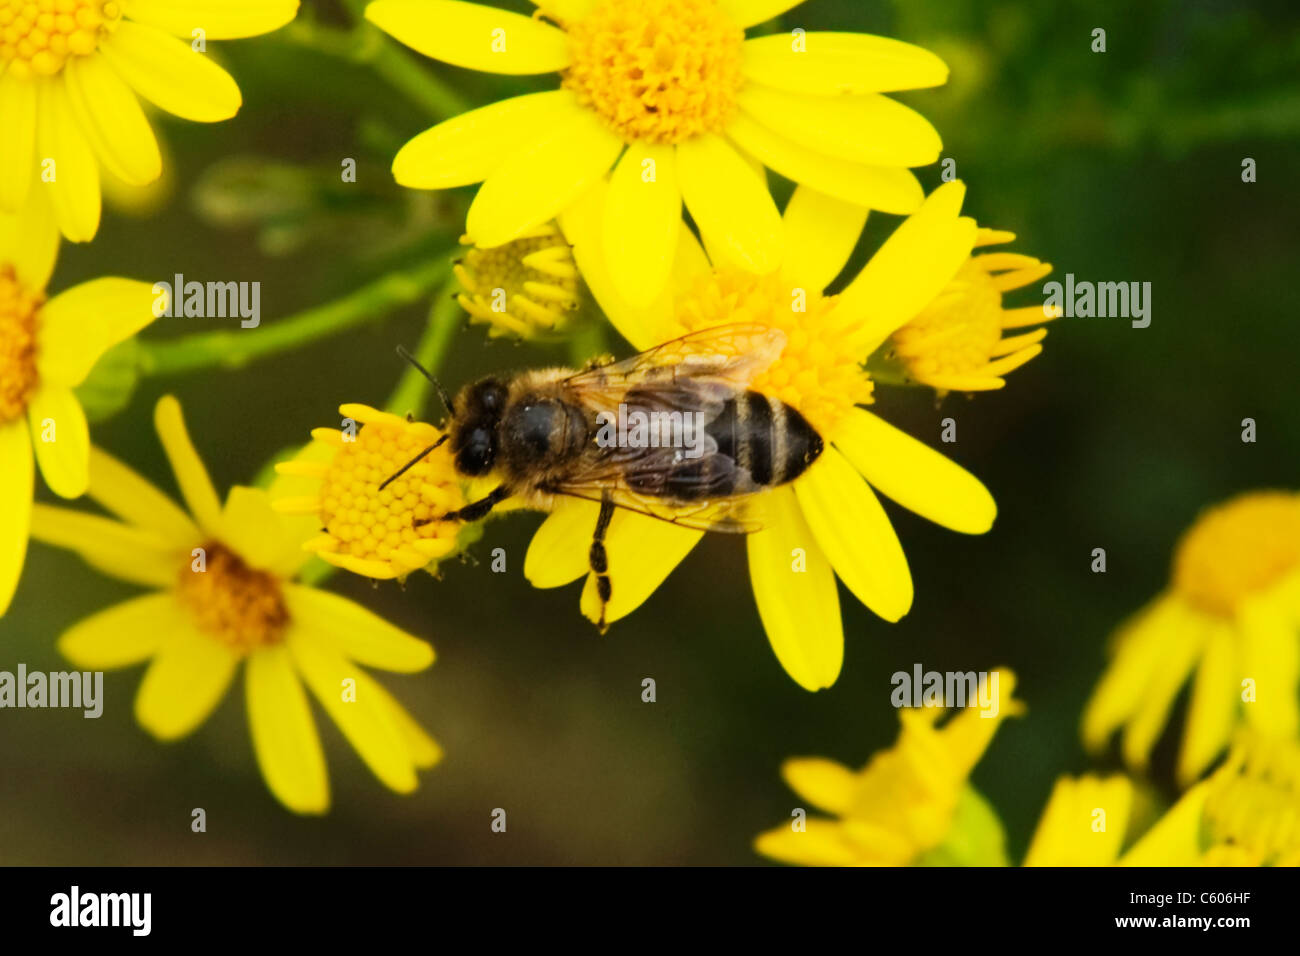 London Parliament Hill , Hampstead Heath , honeybee or honey bee or drone or Apis Mellifera on yellow wild daisies Stock Photo